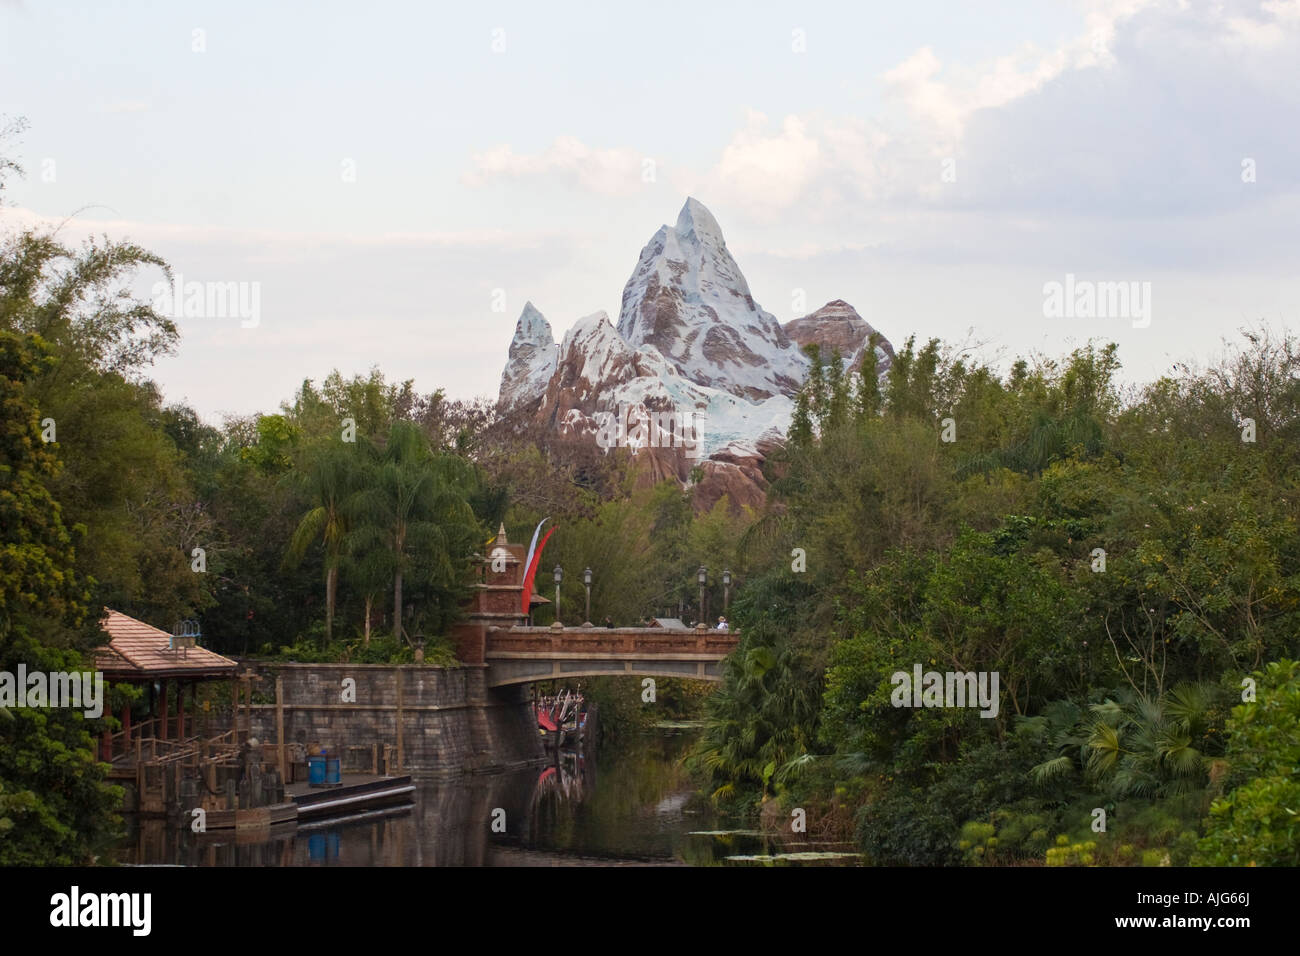 Expedition Everest, Legend of the Forbidden Mountain roller coaster, Disney's Animal Kingdom, Orlando, Florida, United States Stock Photo